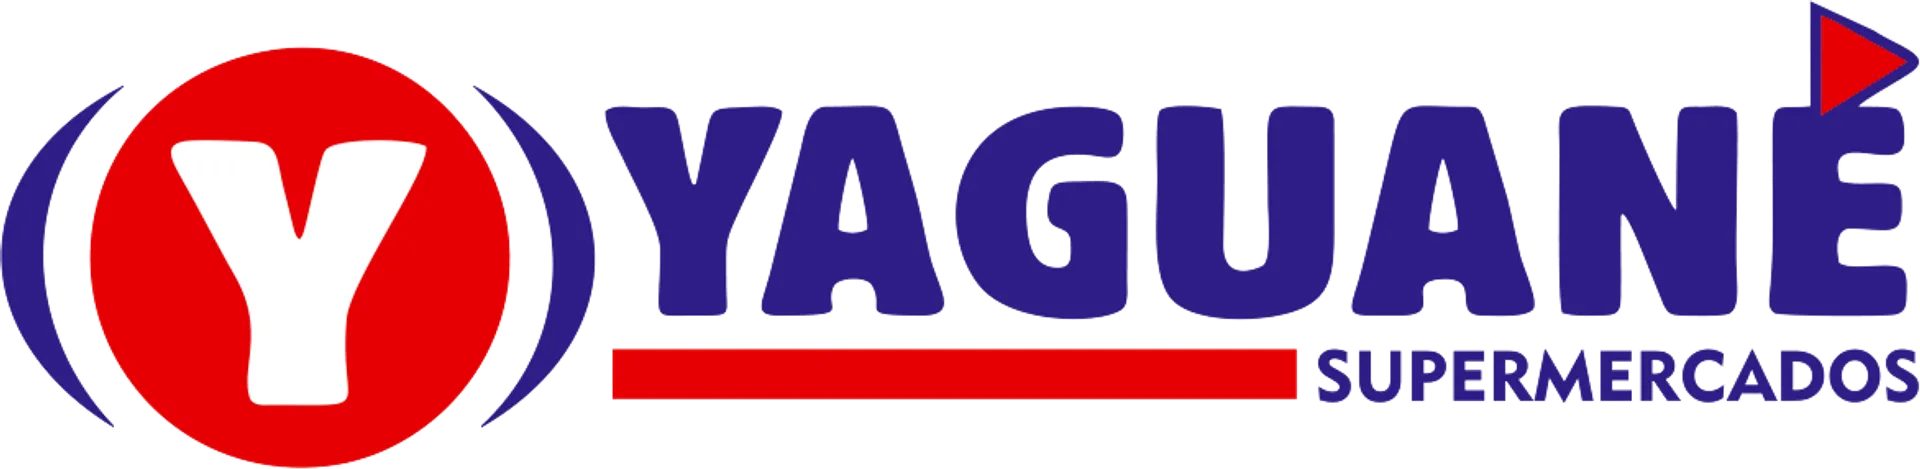 YAGUANÉ SUPERMERCADOS logo